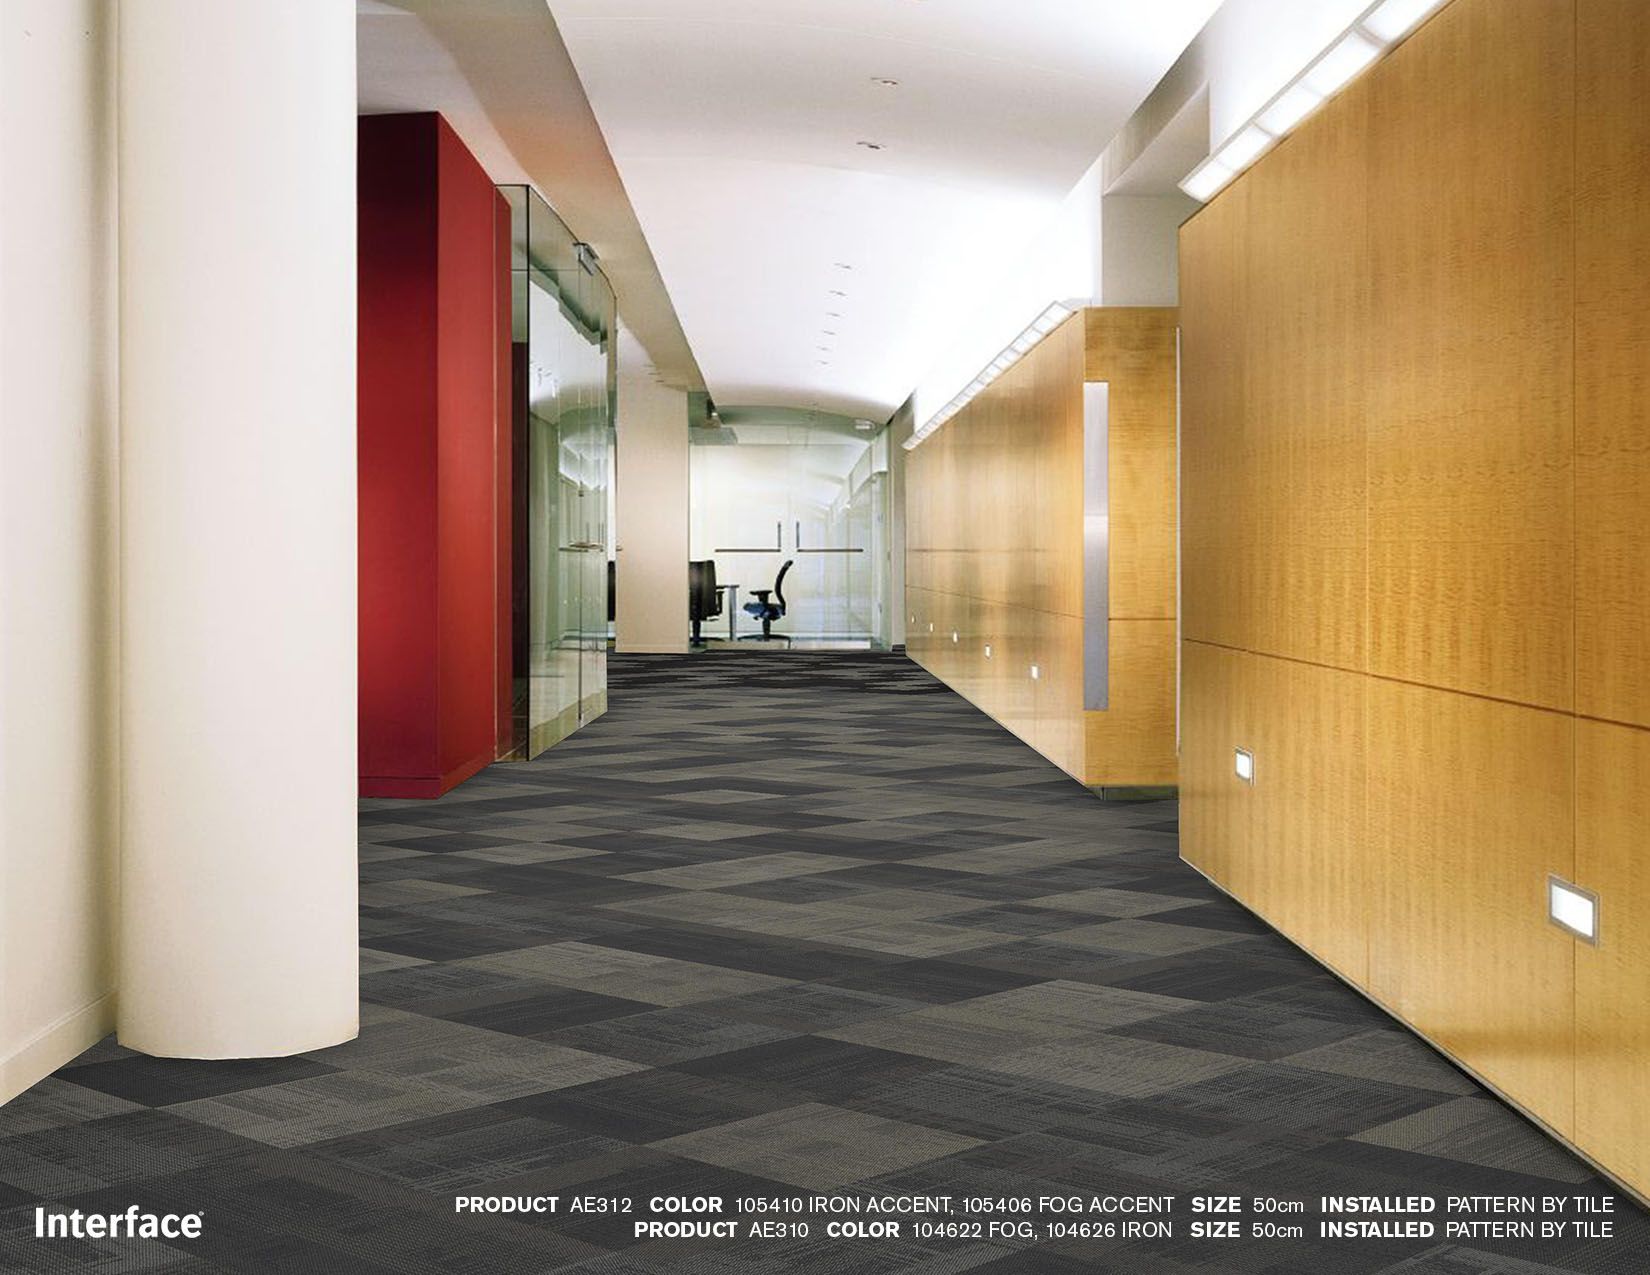 Interface SR899 and AE312 carpet tile in hallway scene imagen número 5